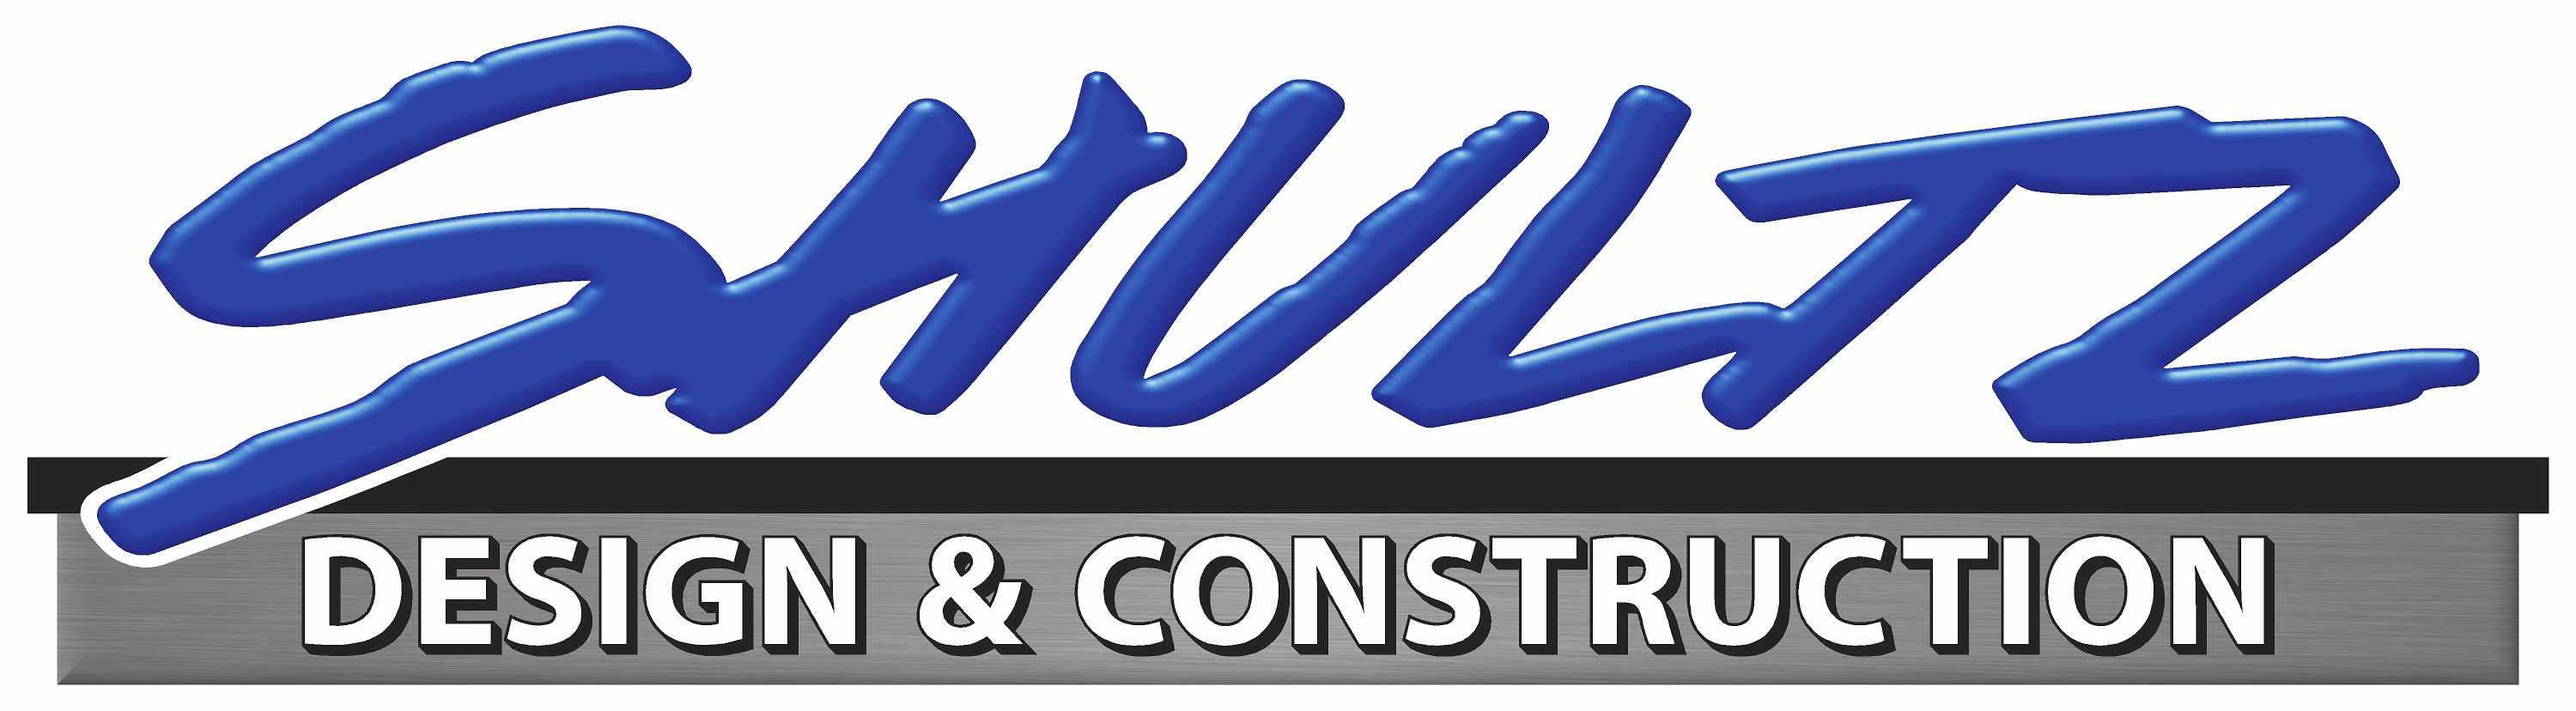 Shultz Design & Construction company logo